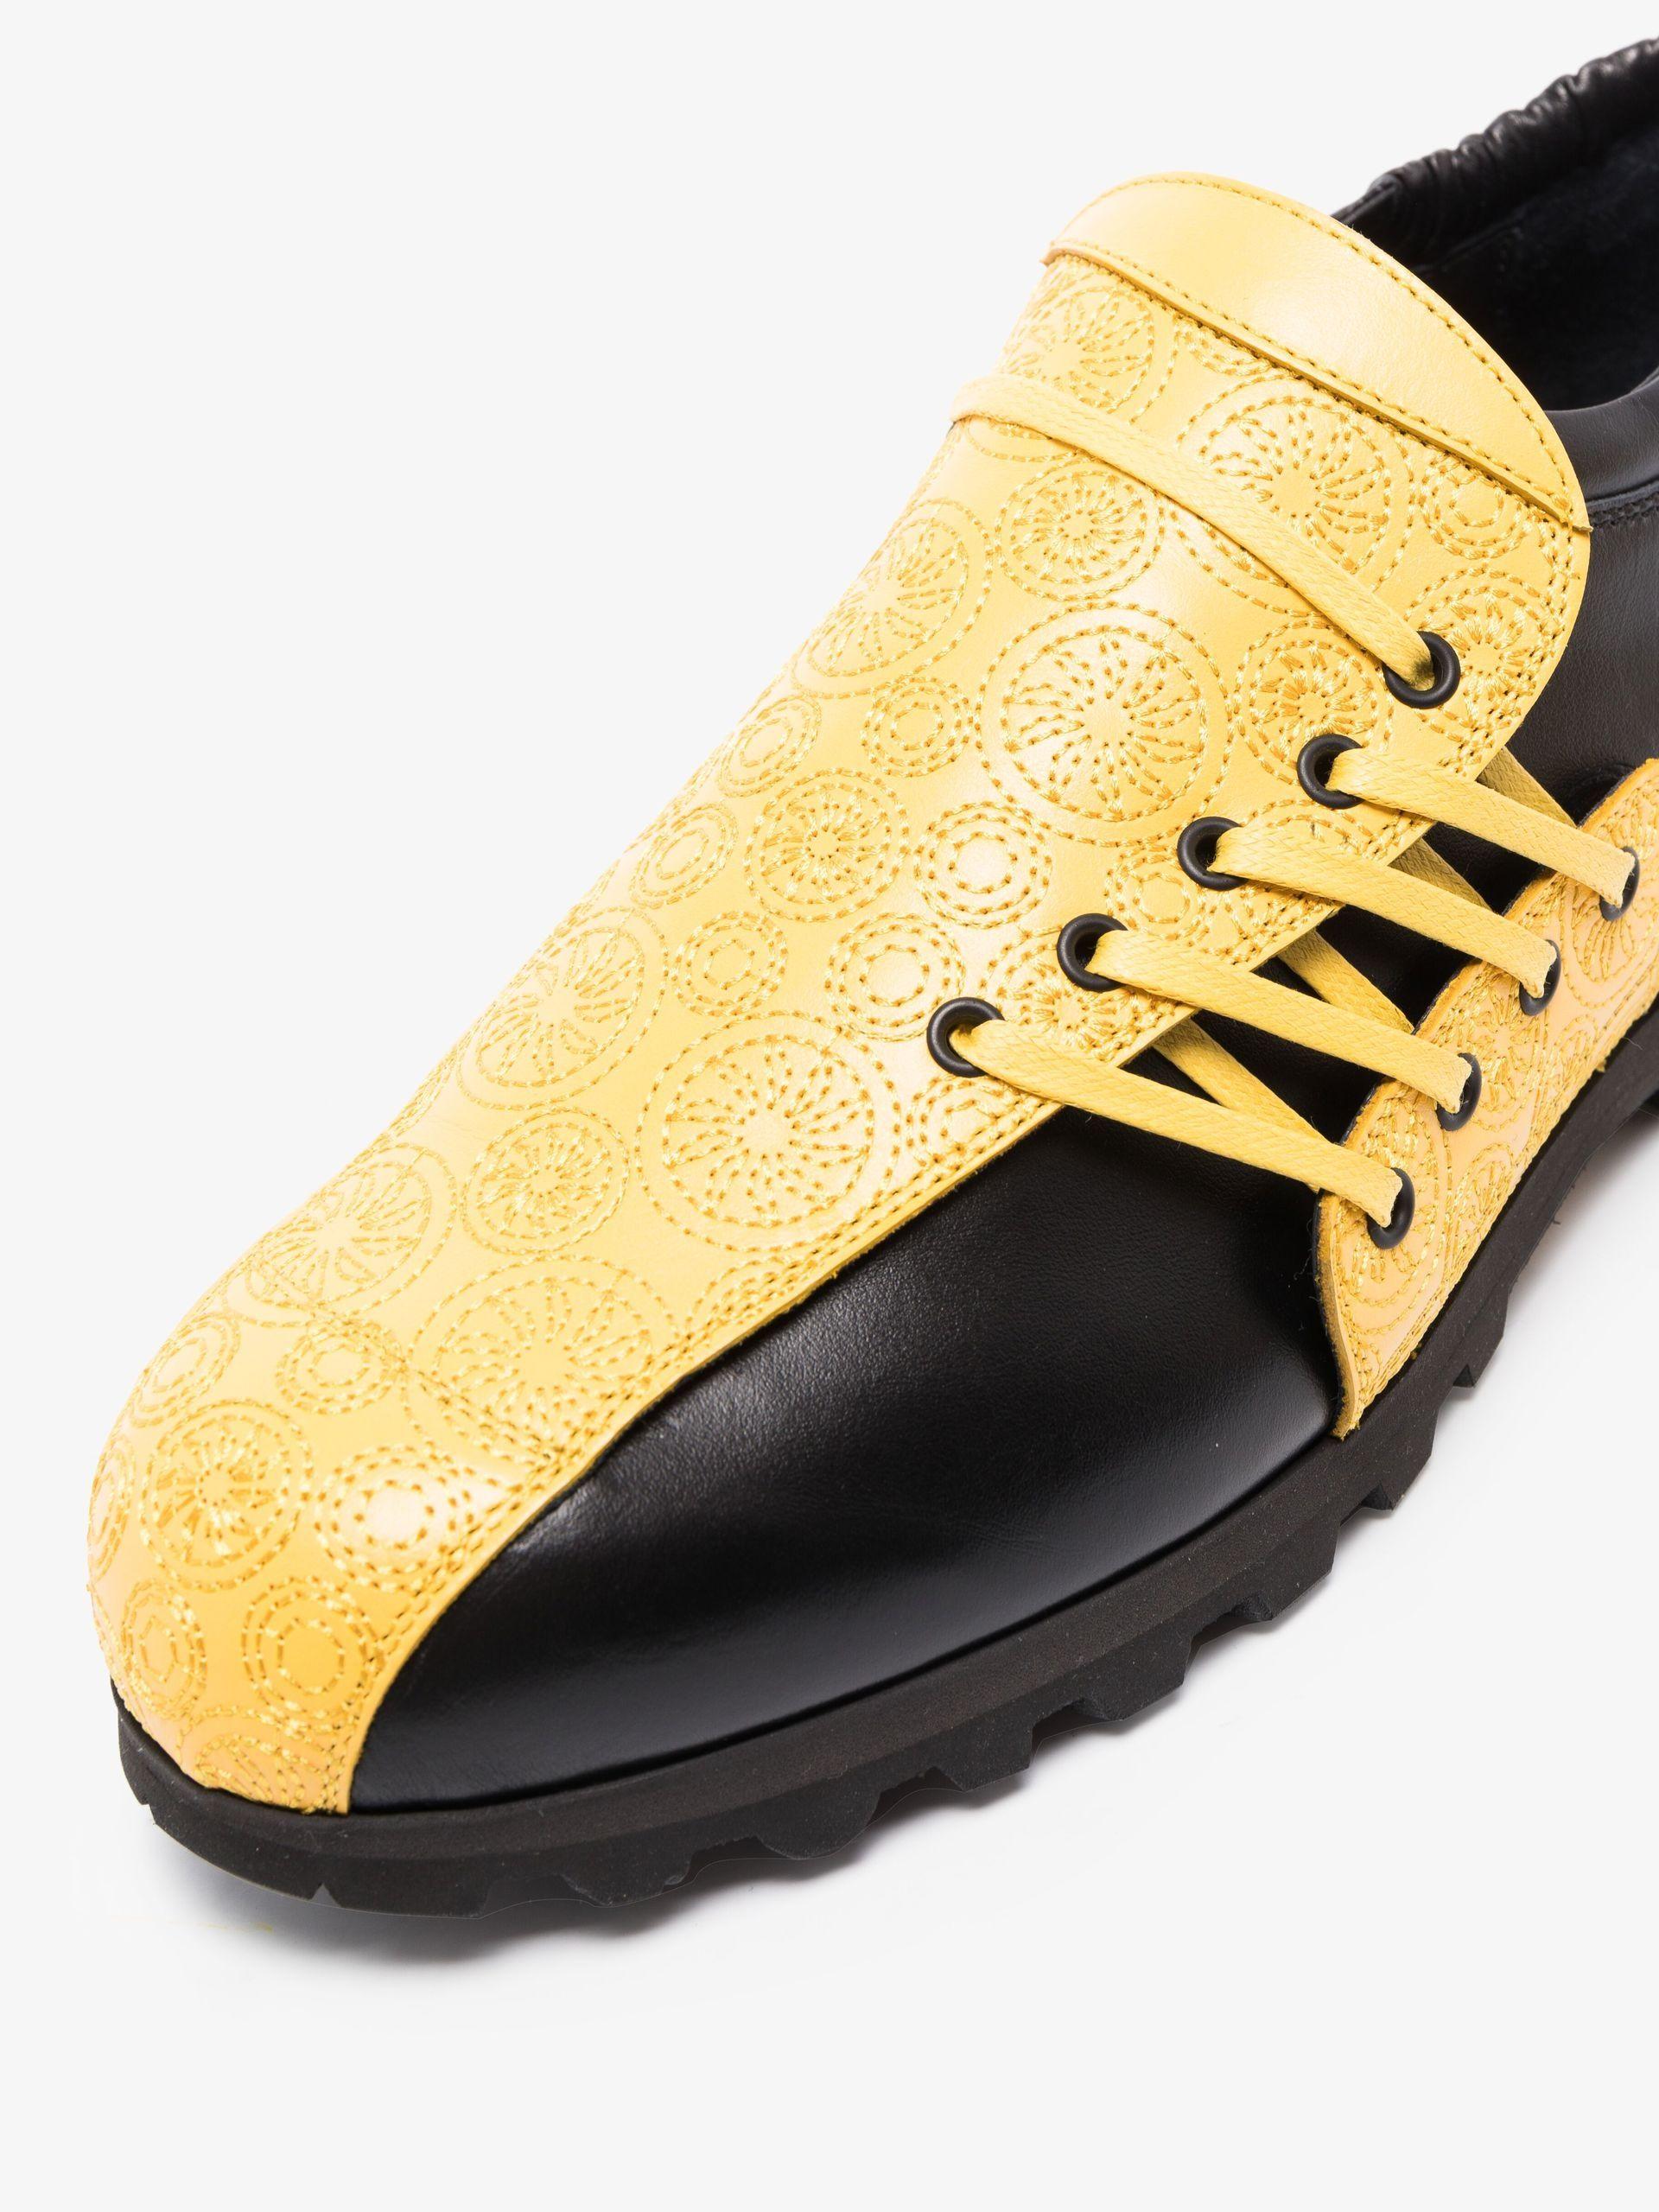 Kiko Kostadinov Black And Yellow Haidu Lace-up Leather Shoes for 